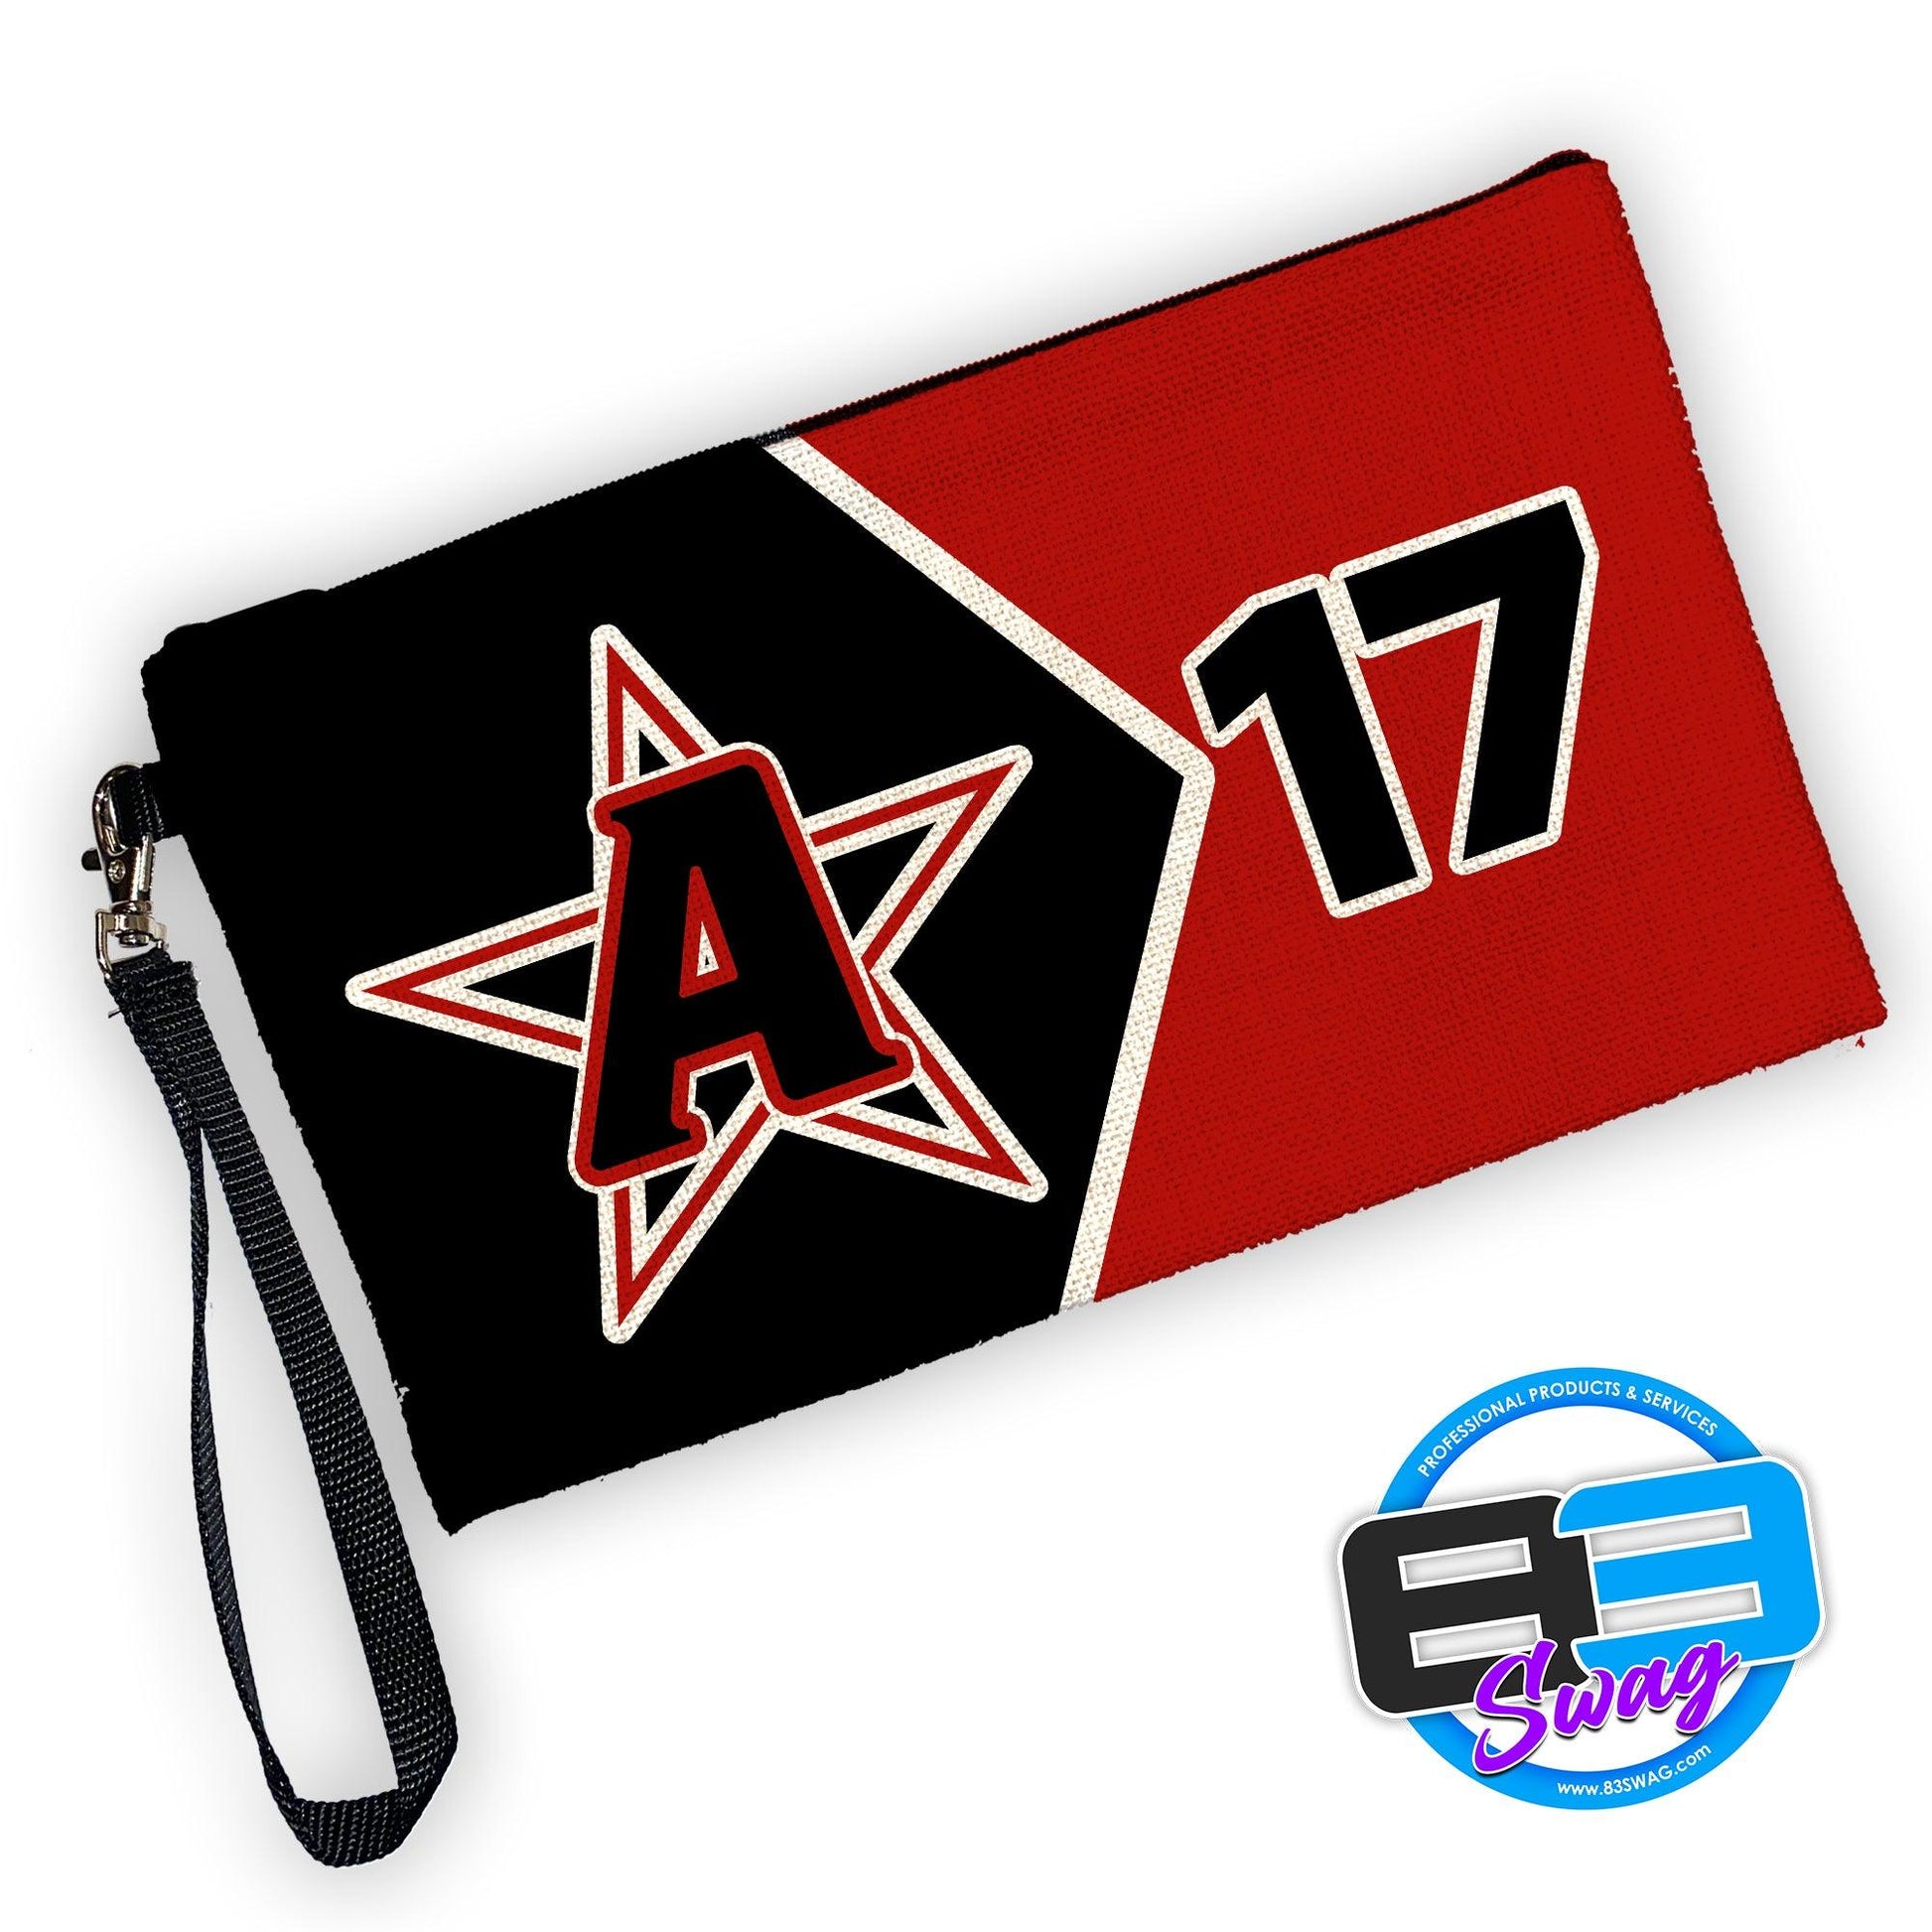 9"x5" Zipper Bag with Wrist Strap - Ashford 10u All-Stars - 83Swag